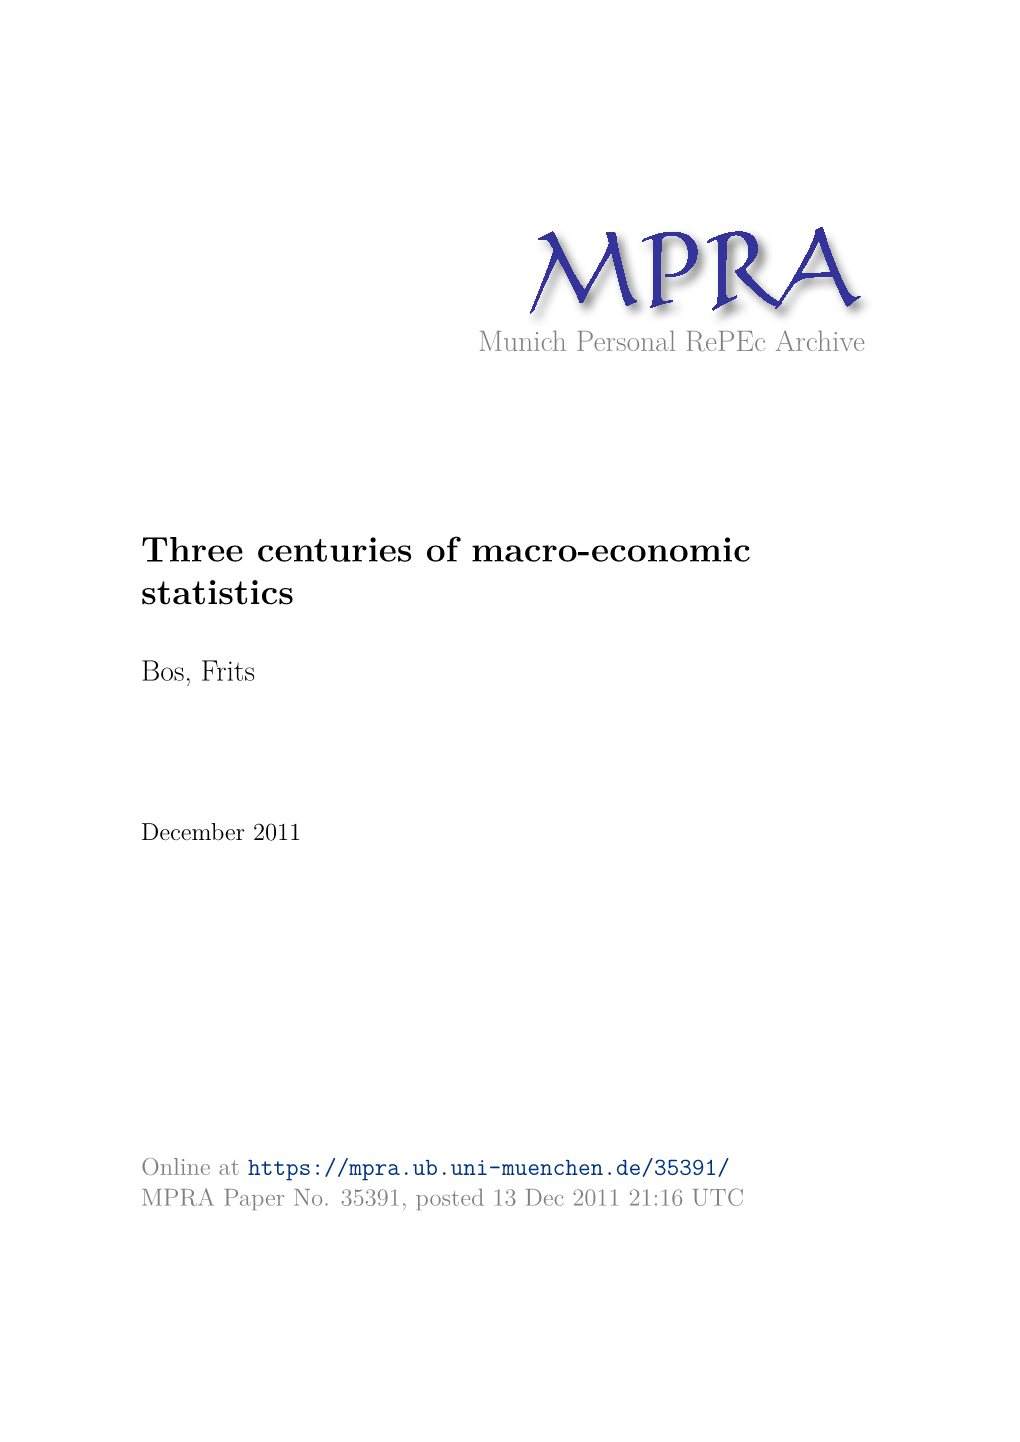 Three Centuries of Macro-Economic Statistics